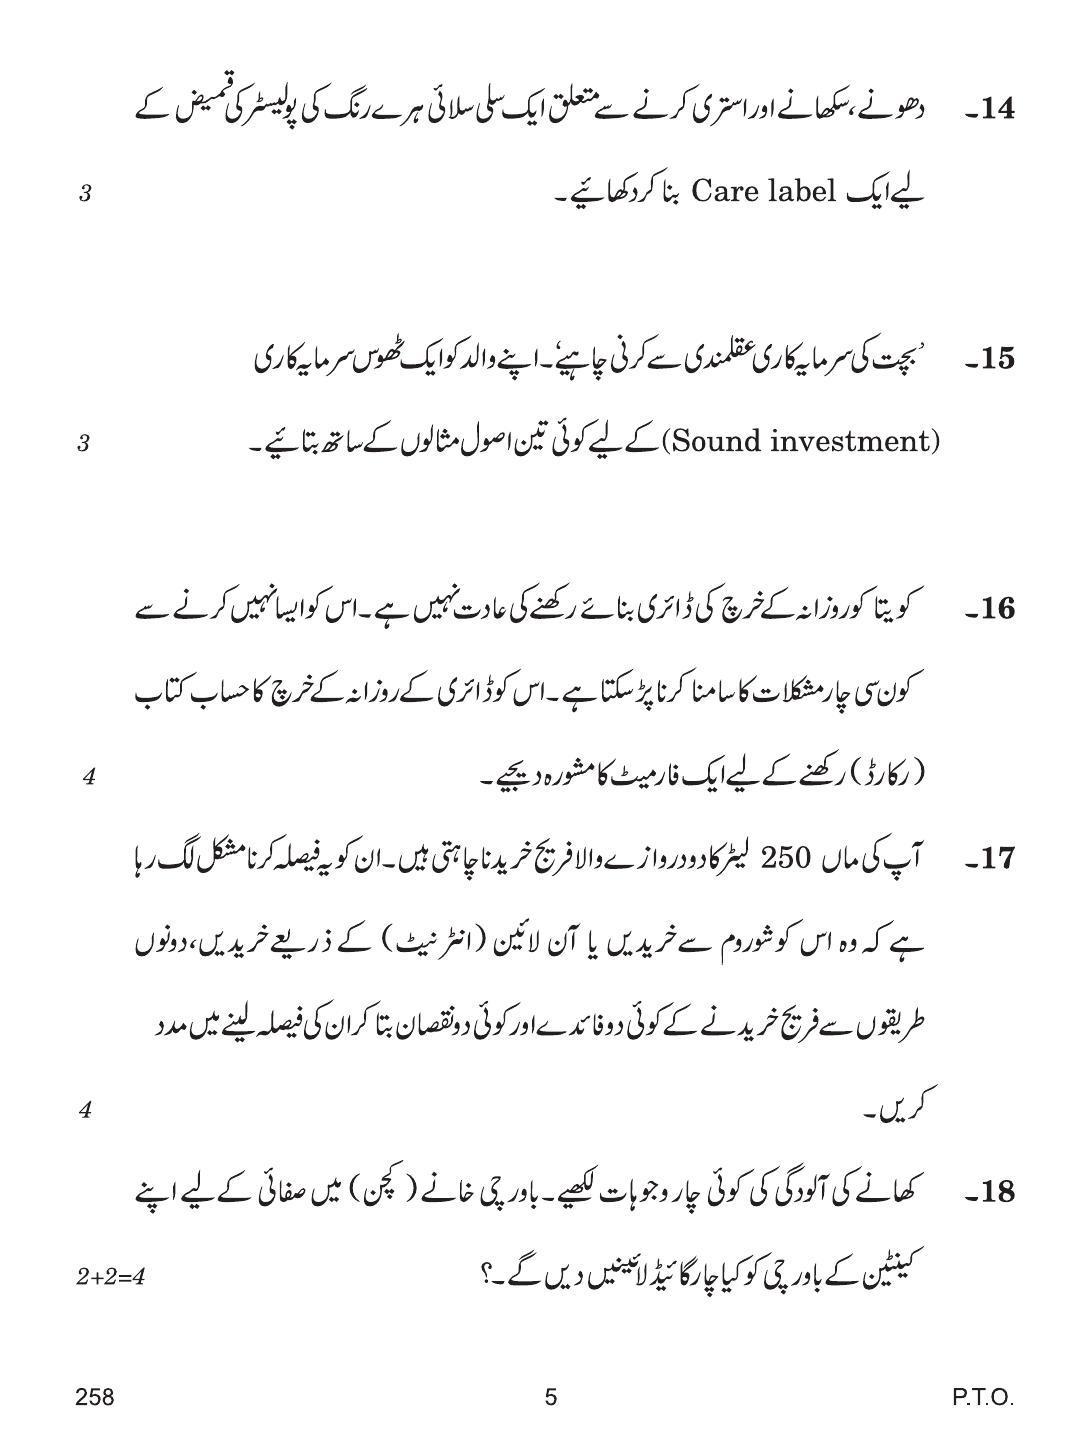 CBSE Class 12 258 (Home Science Urdu) 2018 Question Paper - Page 5